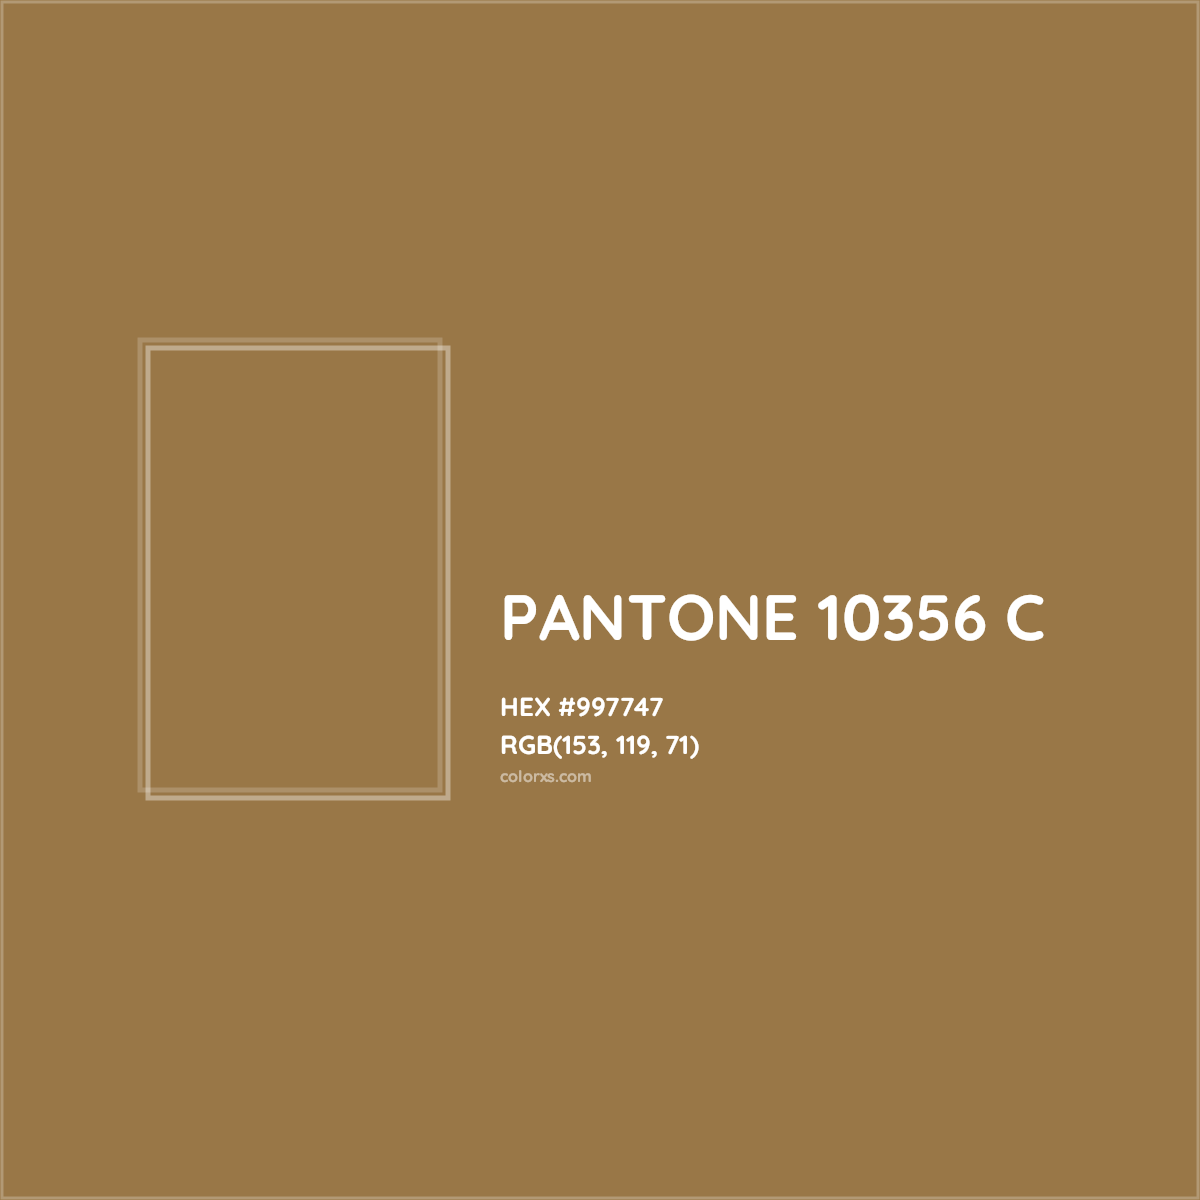 HEX #997747 PANTONE 10356 C CMS Pantone PMS - Color Code